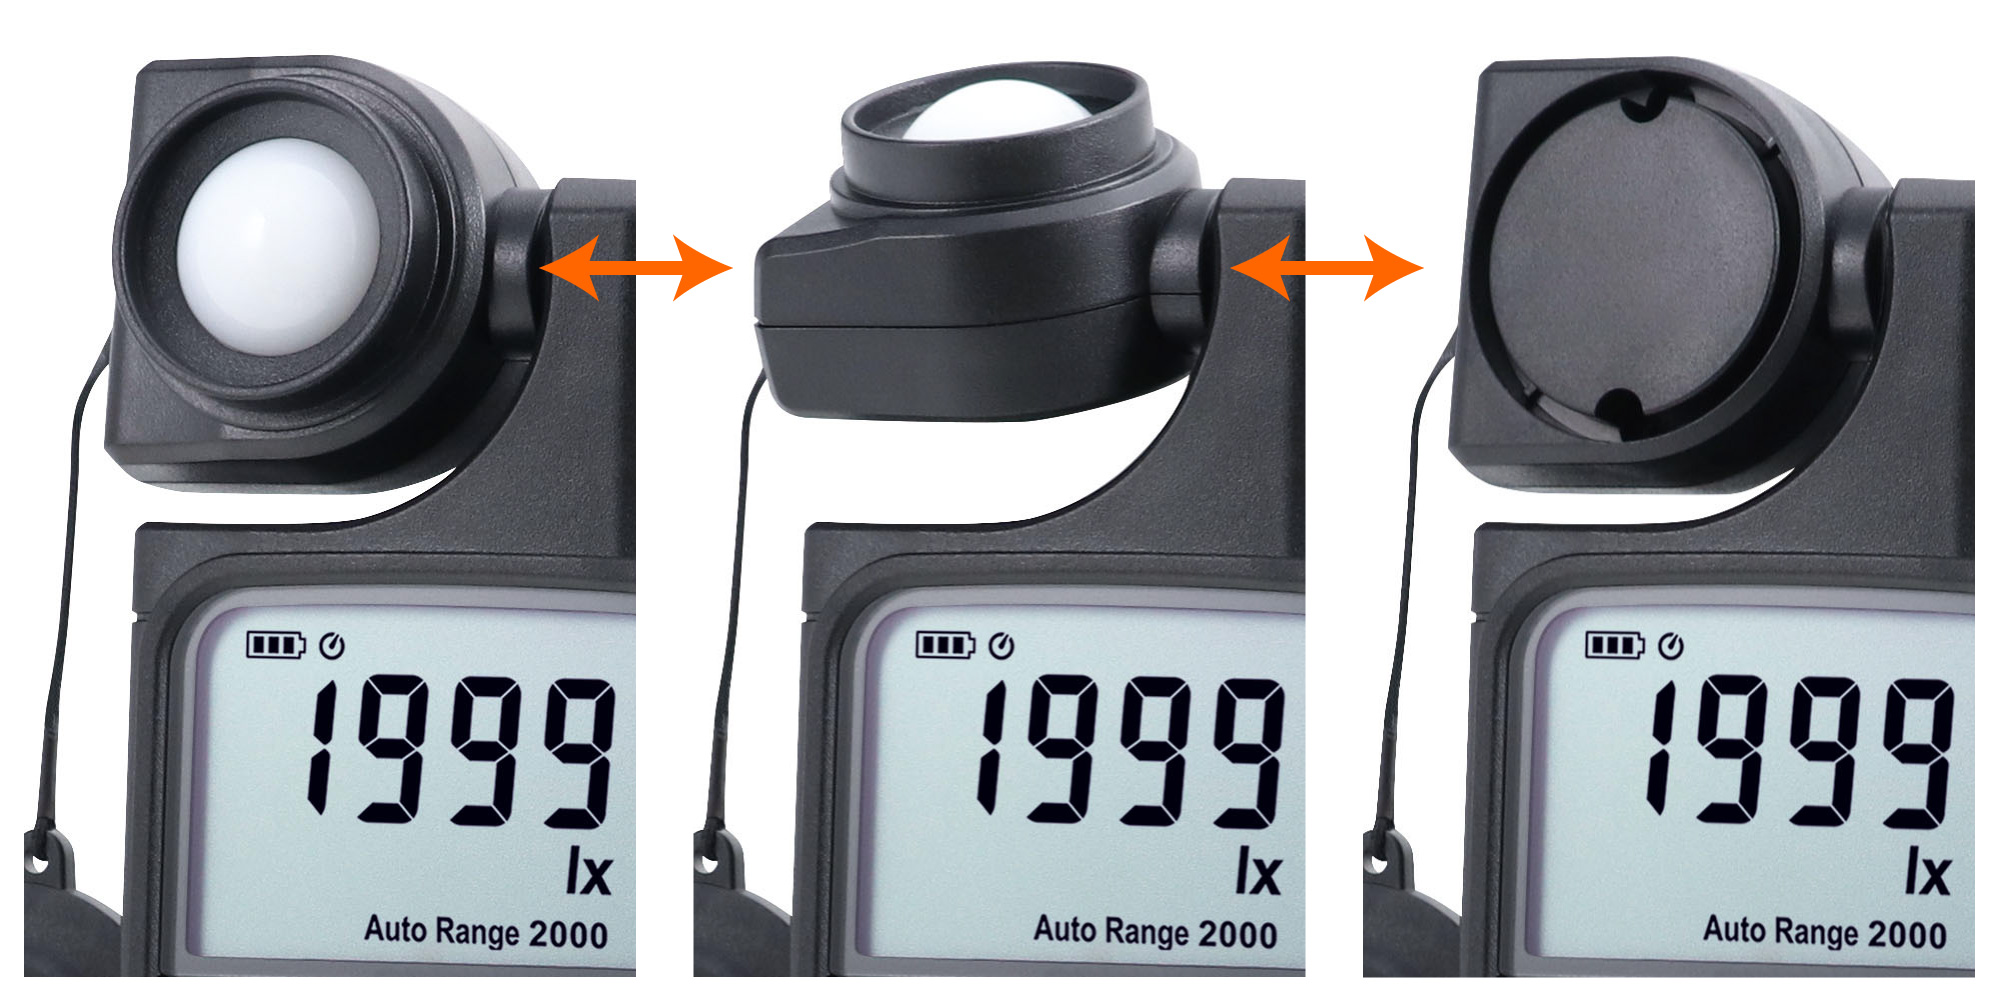 LEDモード付 デジタル照度計 LX-3000 自然環境測定器 製品情報 計測器のカスタム